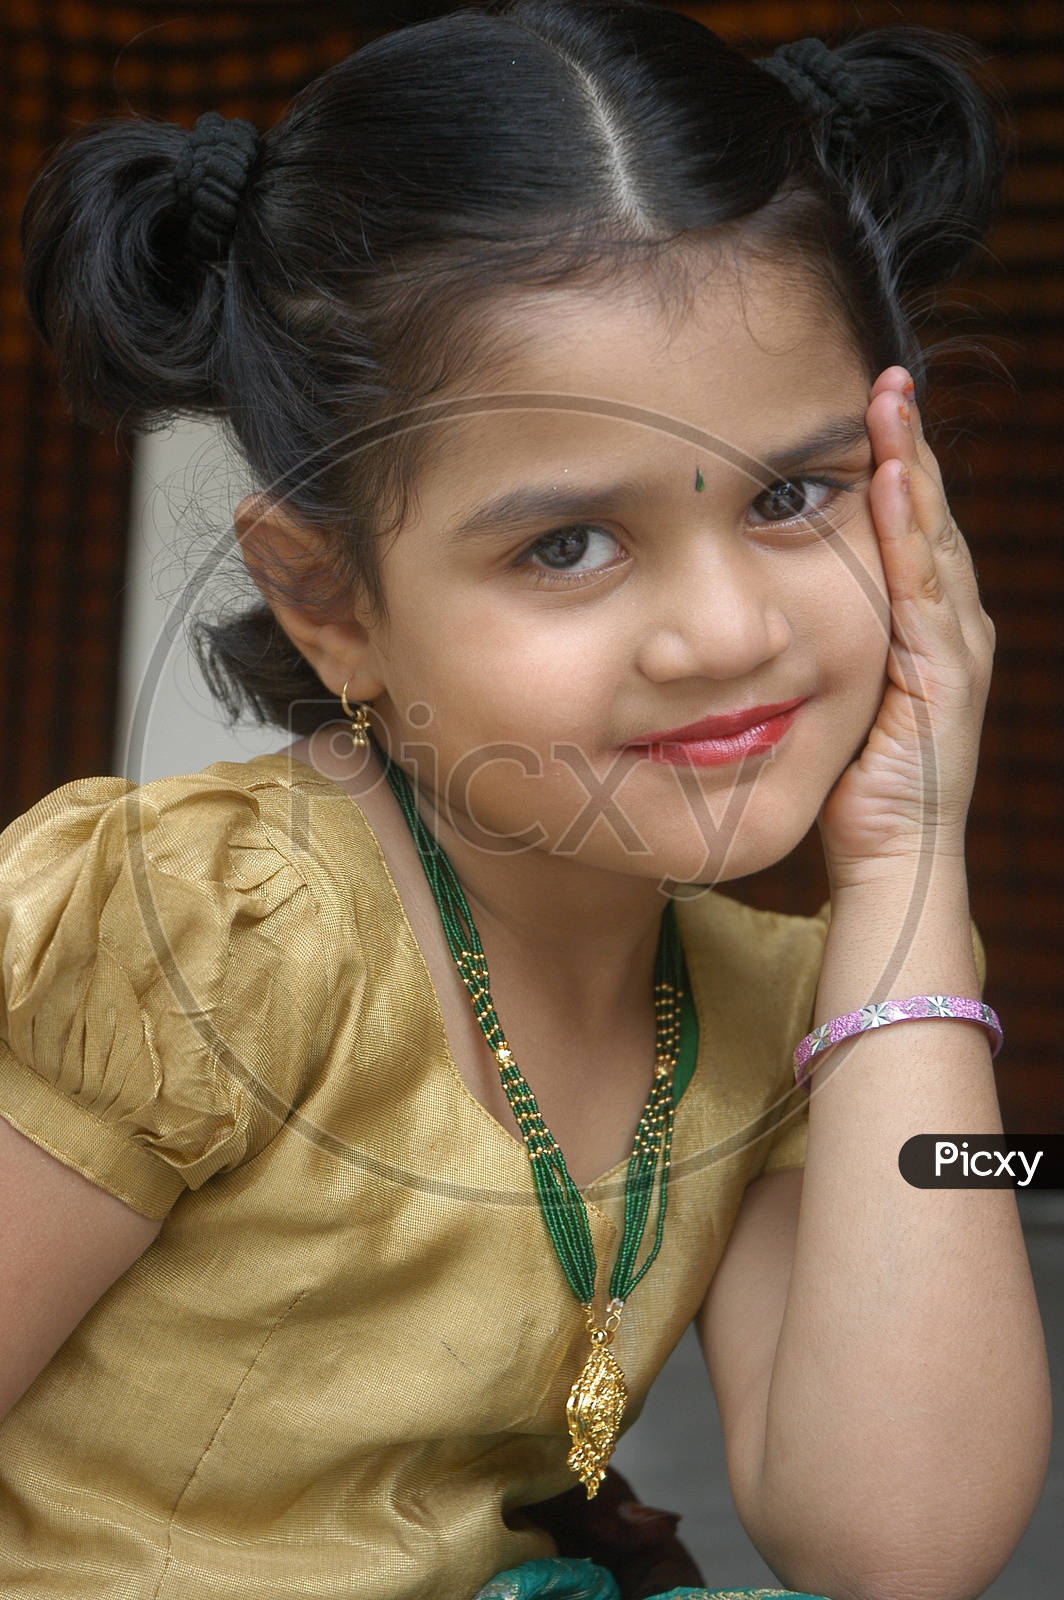 Indian little girl posing wearing lipstick